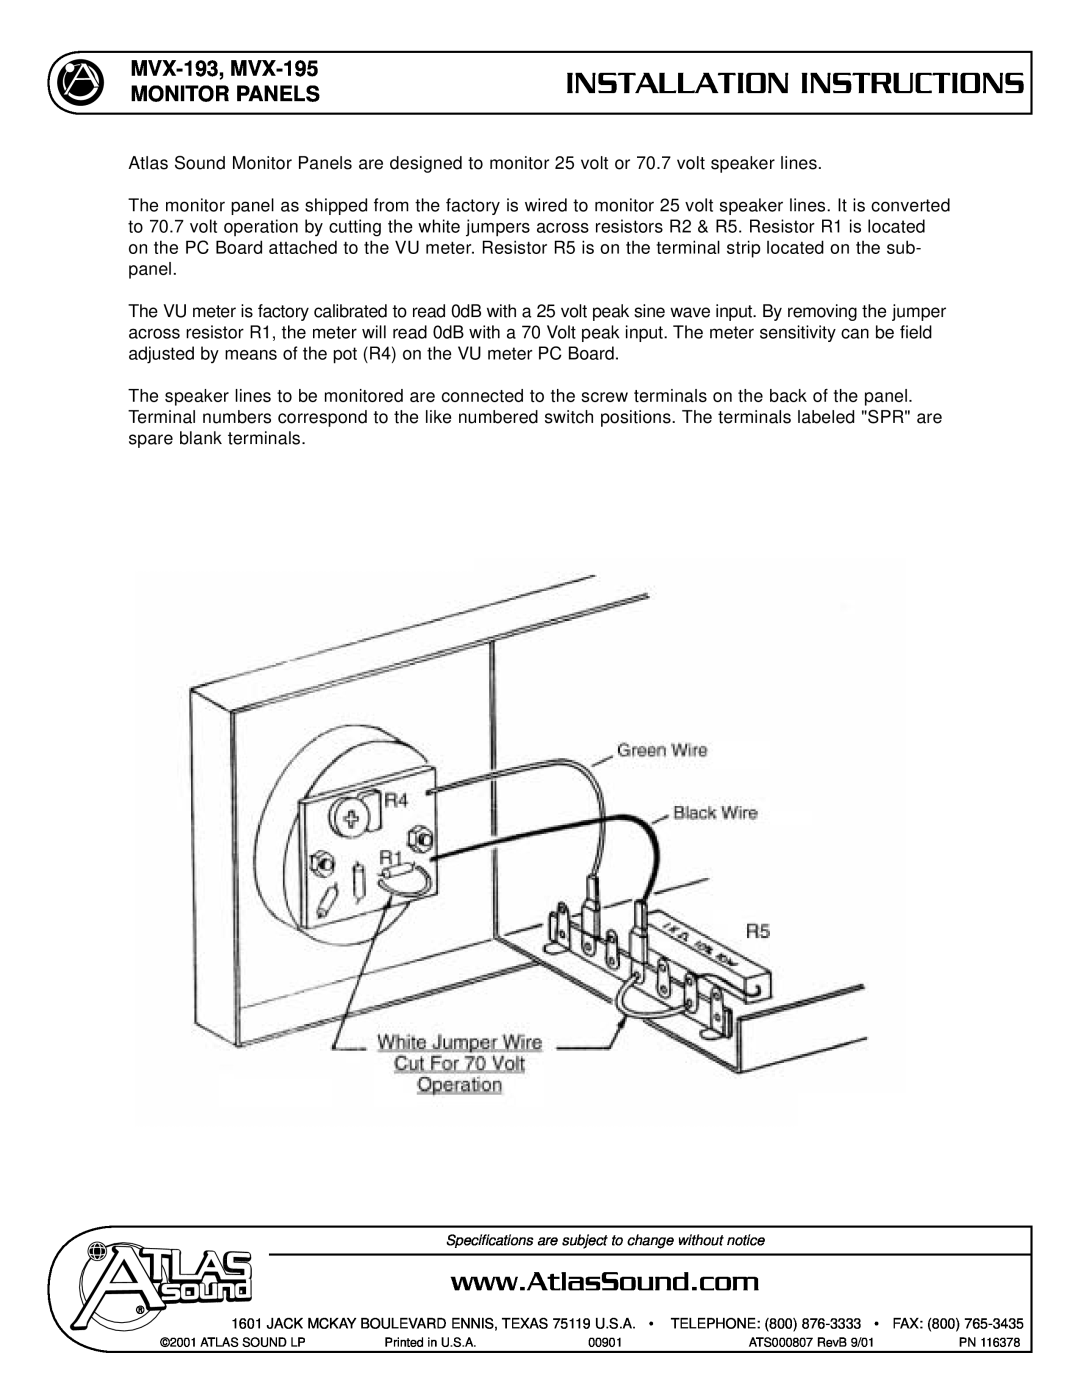 Atlas Sound installation instructions Installation Instructions, MVX-193, MVX-195 MONITOR PANELS 